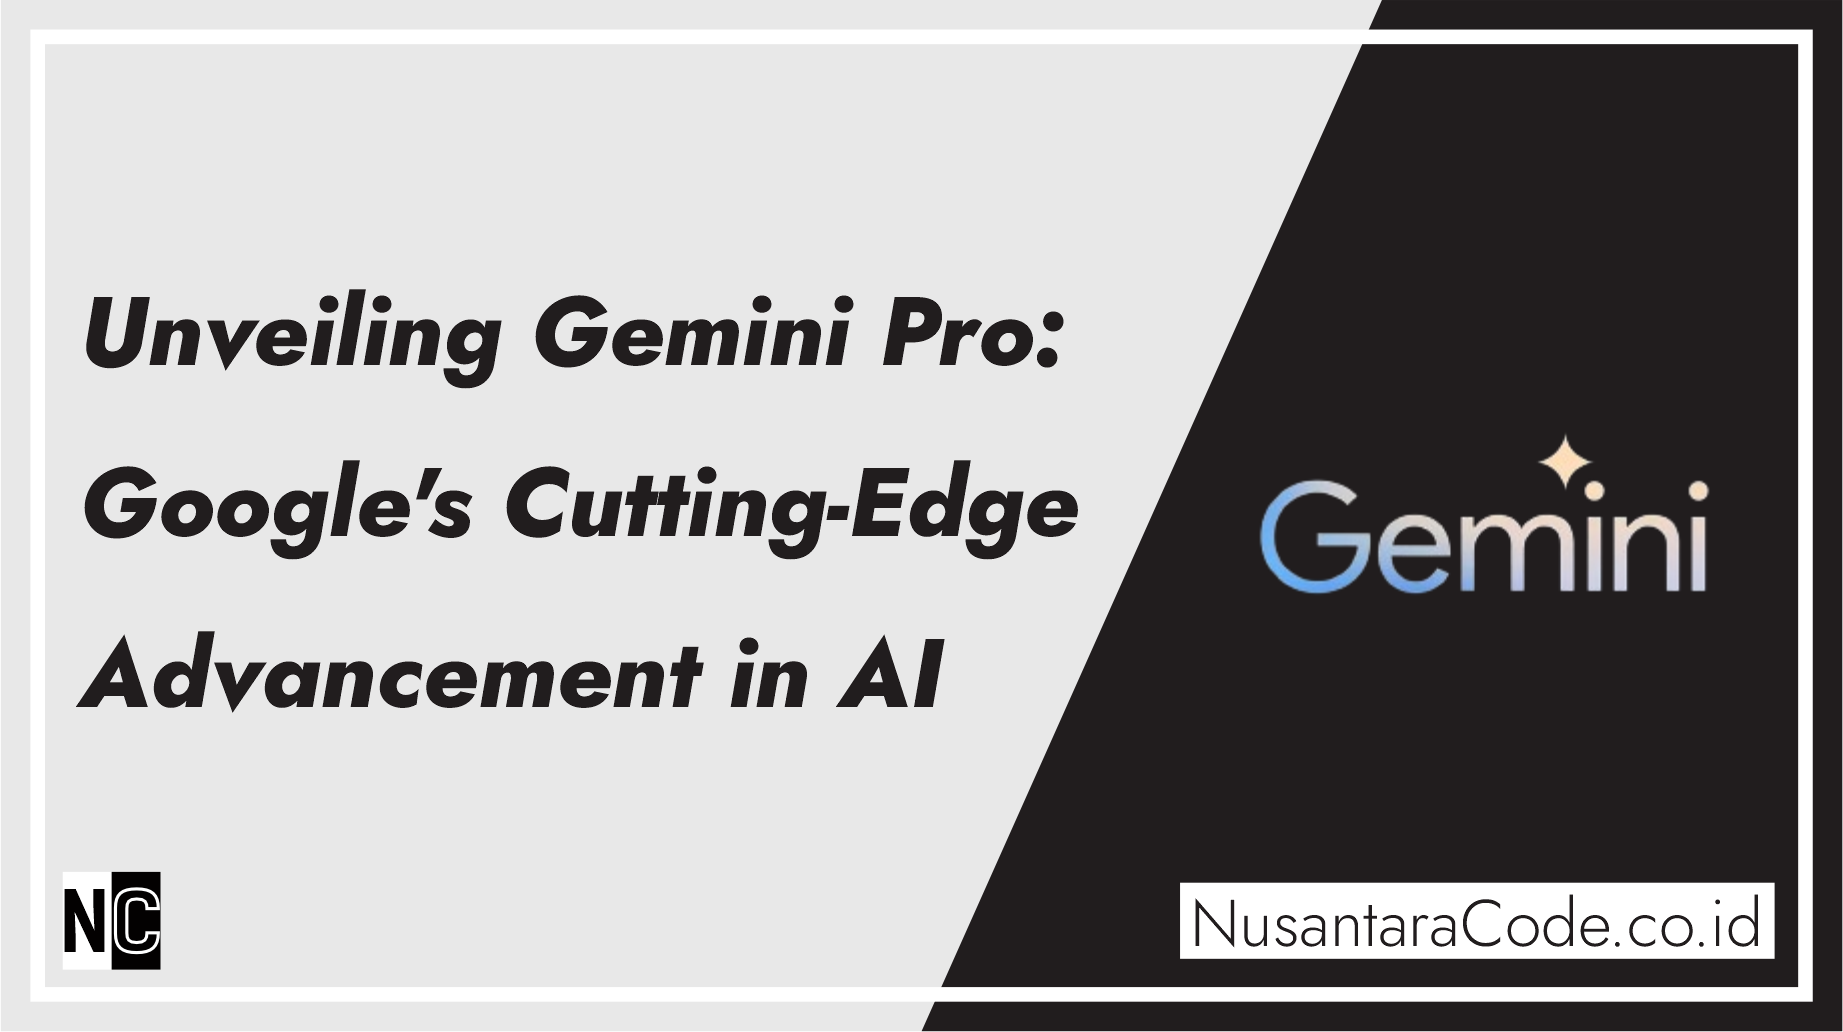 Unveiling Gemini Pro: Google’s Cutting-Edge Advancement in Artificial Intelligence